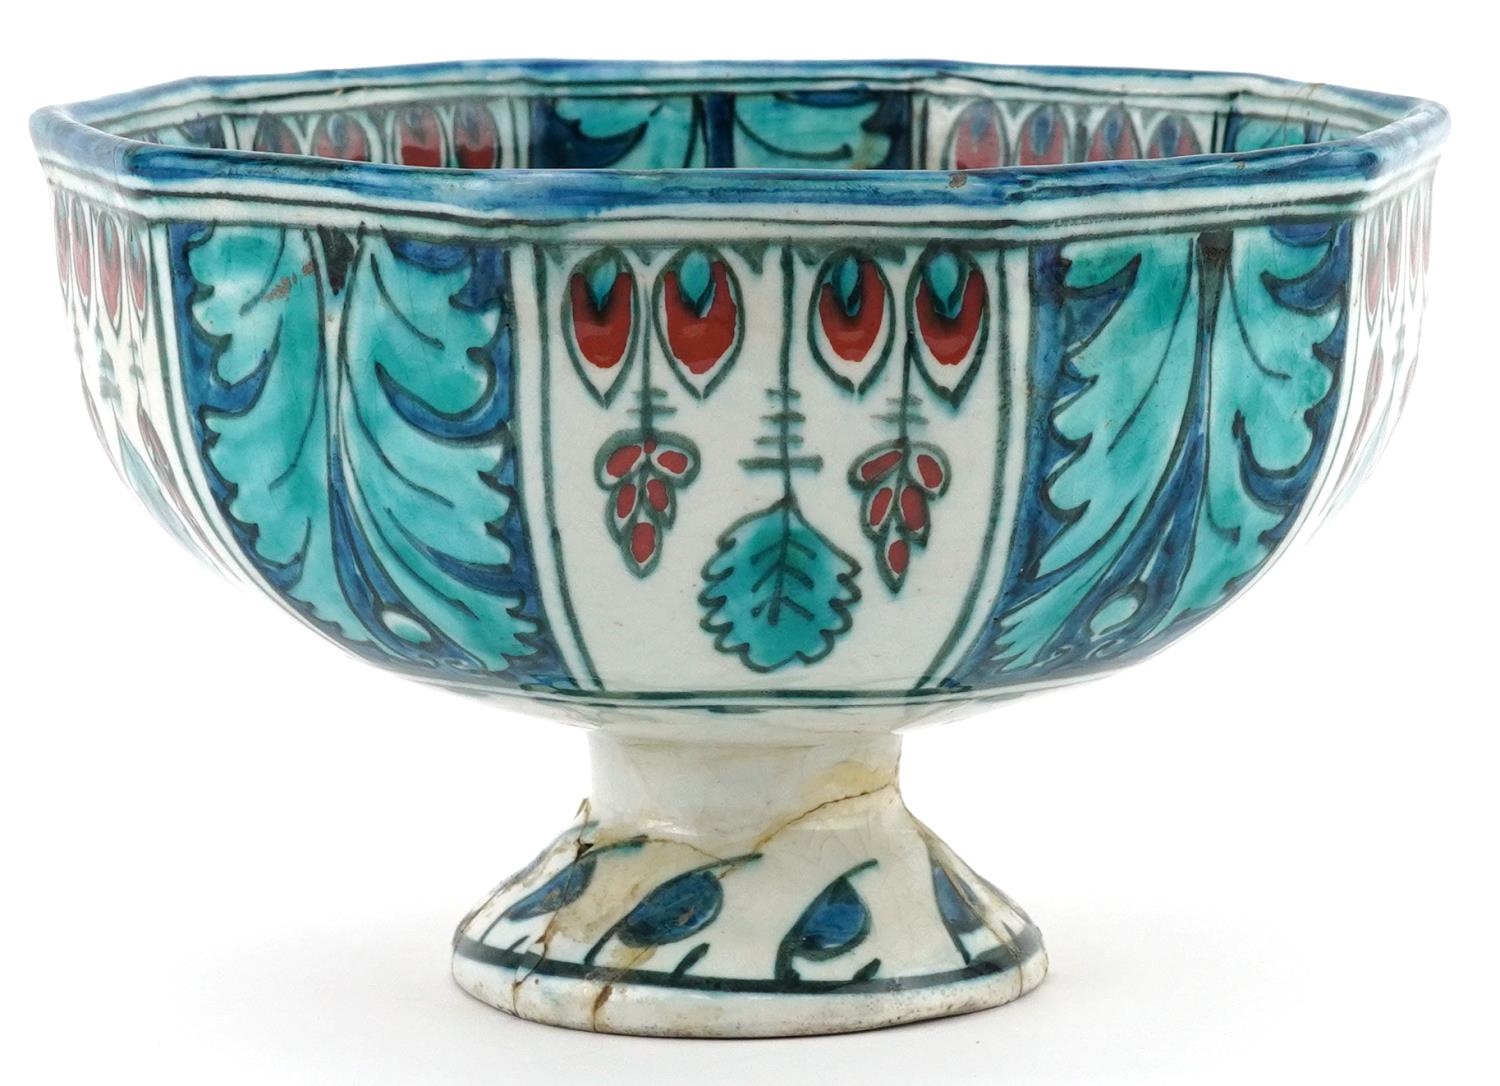 Antique Dutch Delft pedestal bowl hand painted with flowers, 16.5cm in diameter